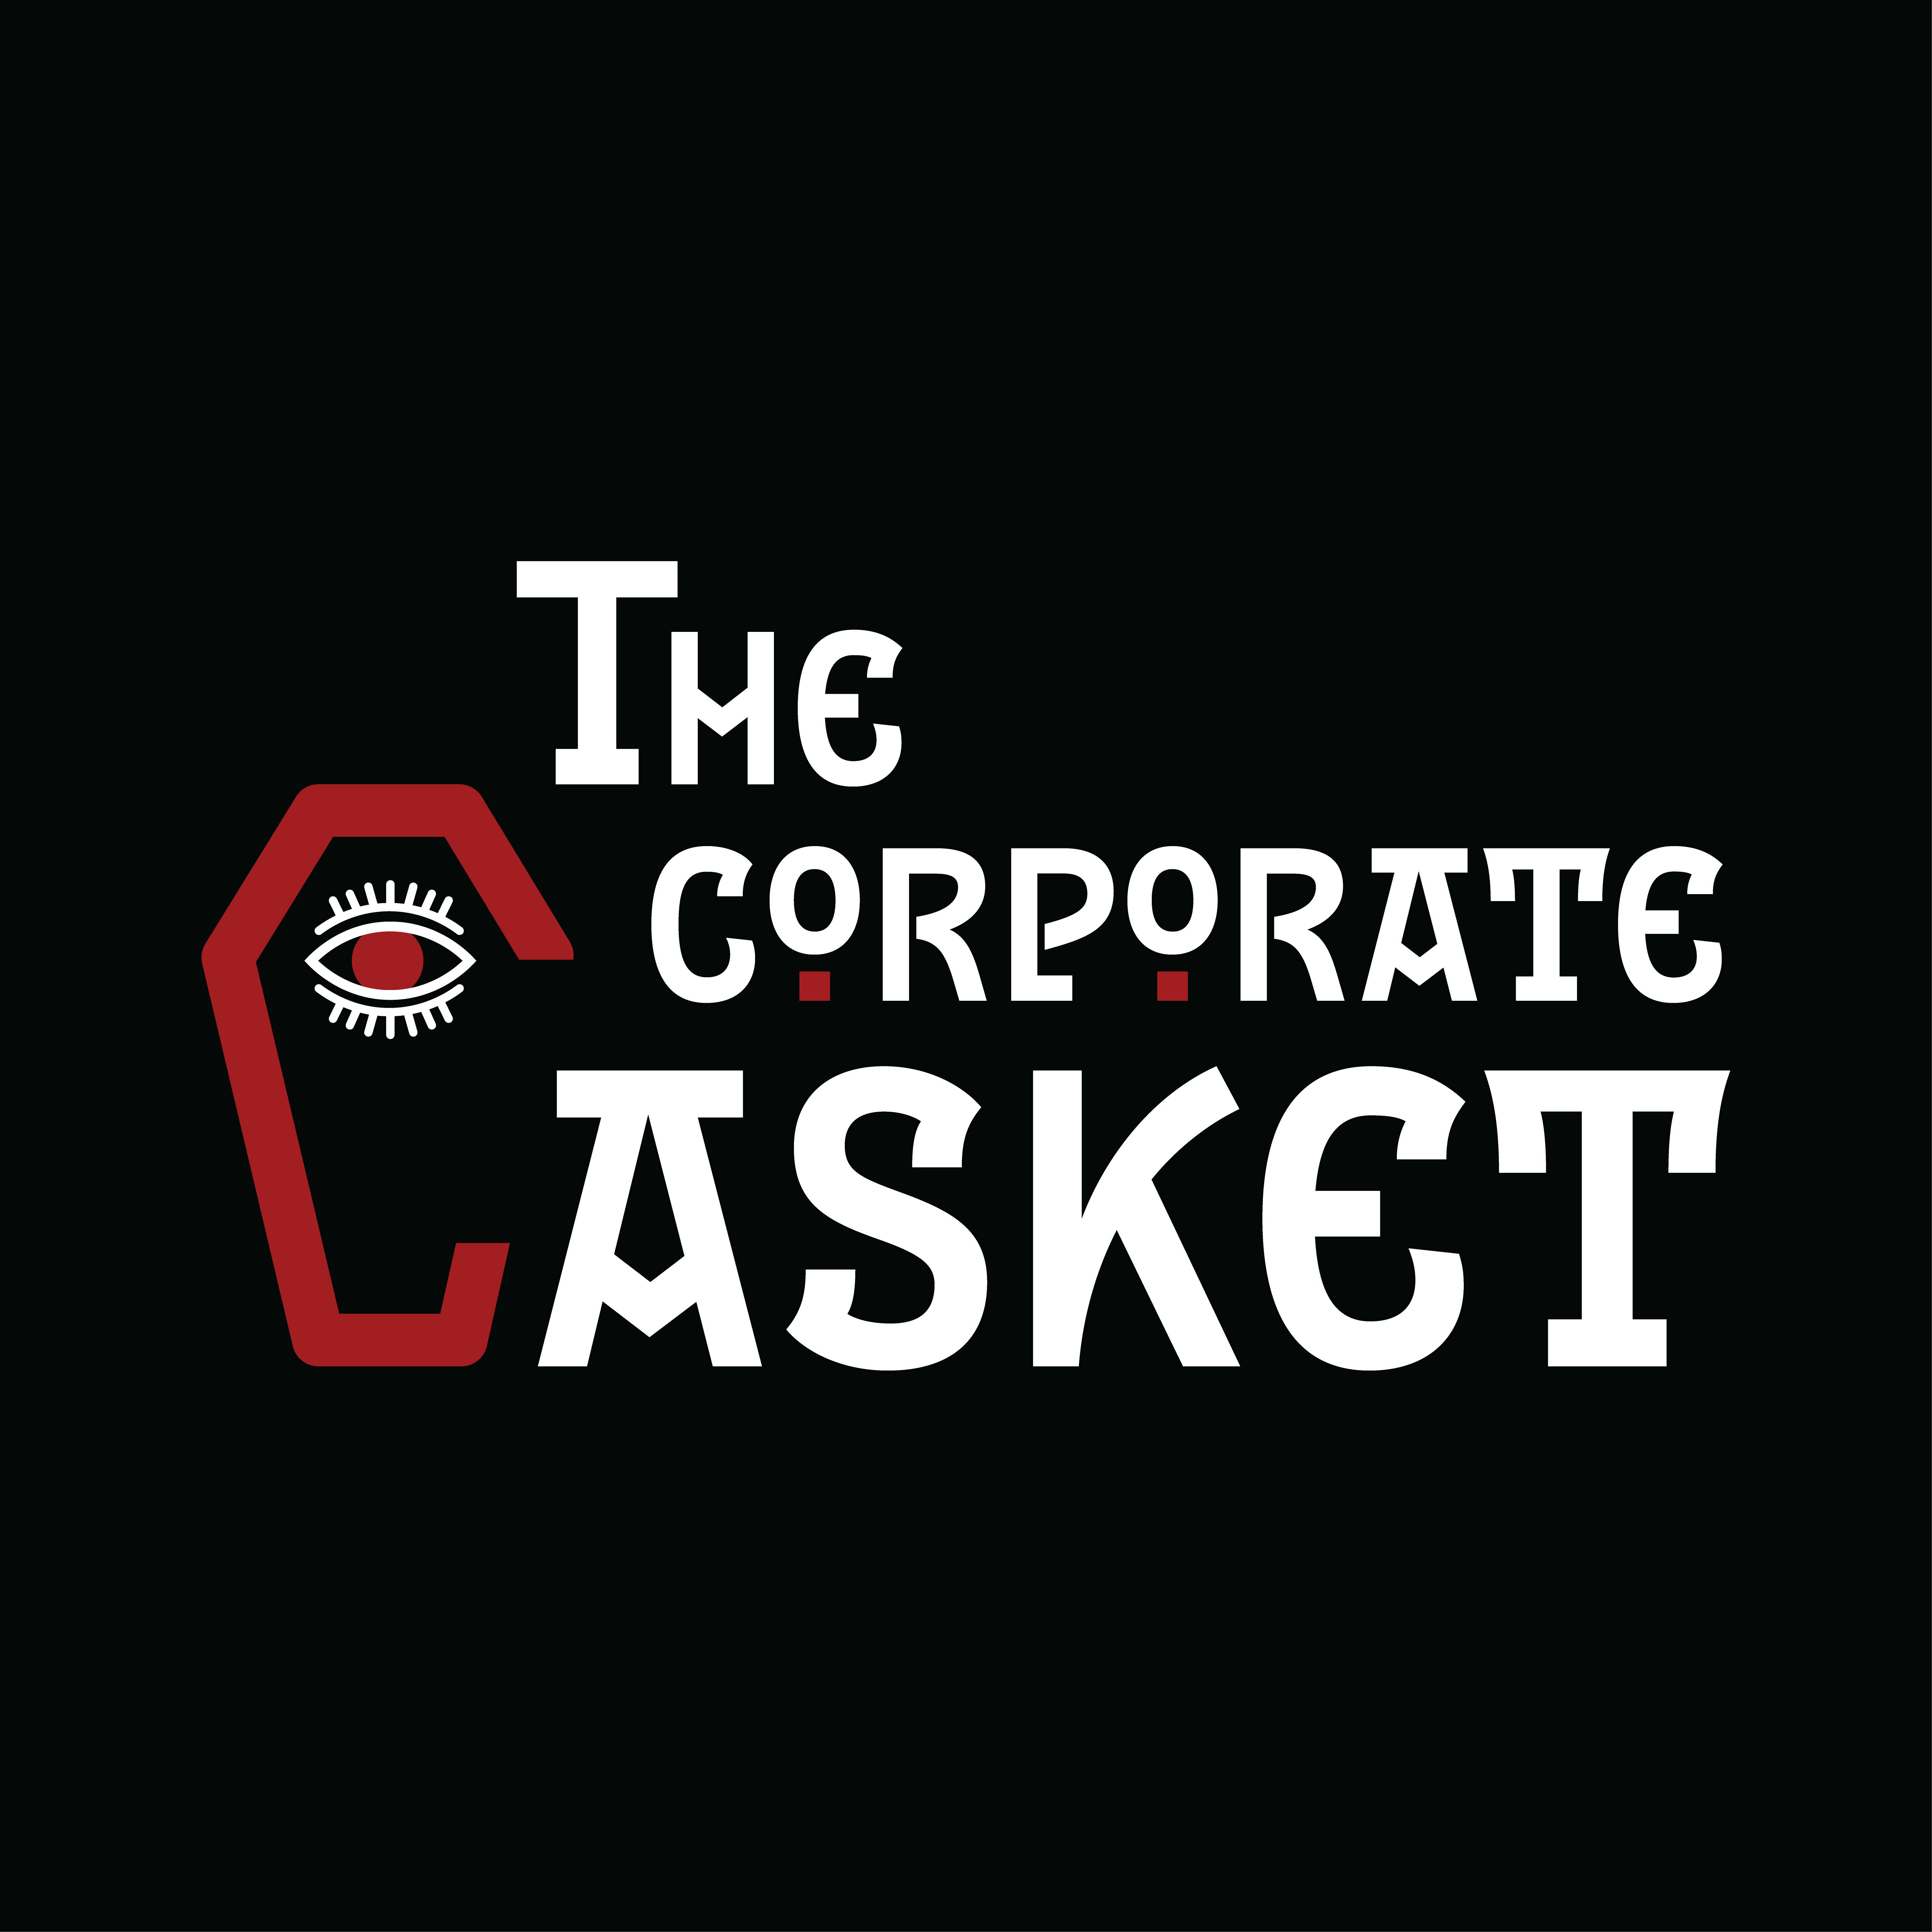 Hobby Lobby: Corporate Casket